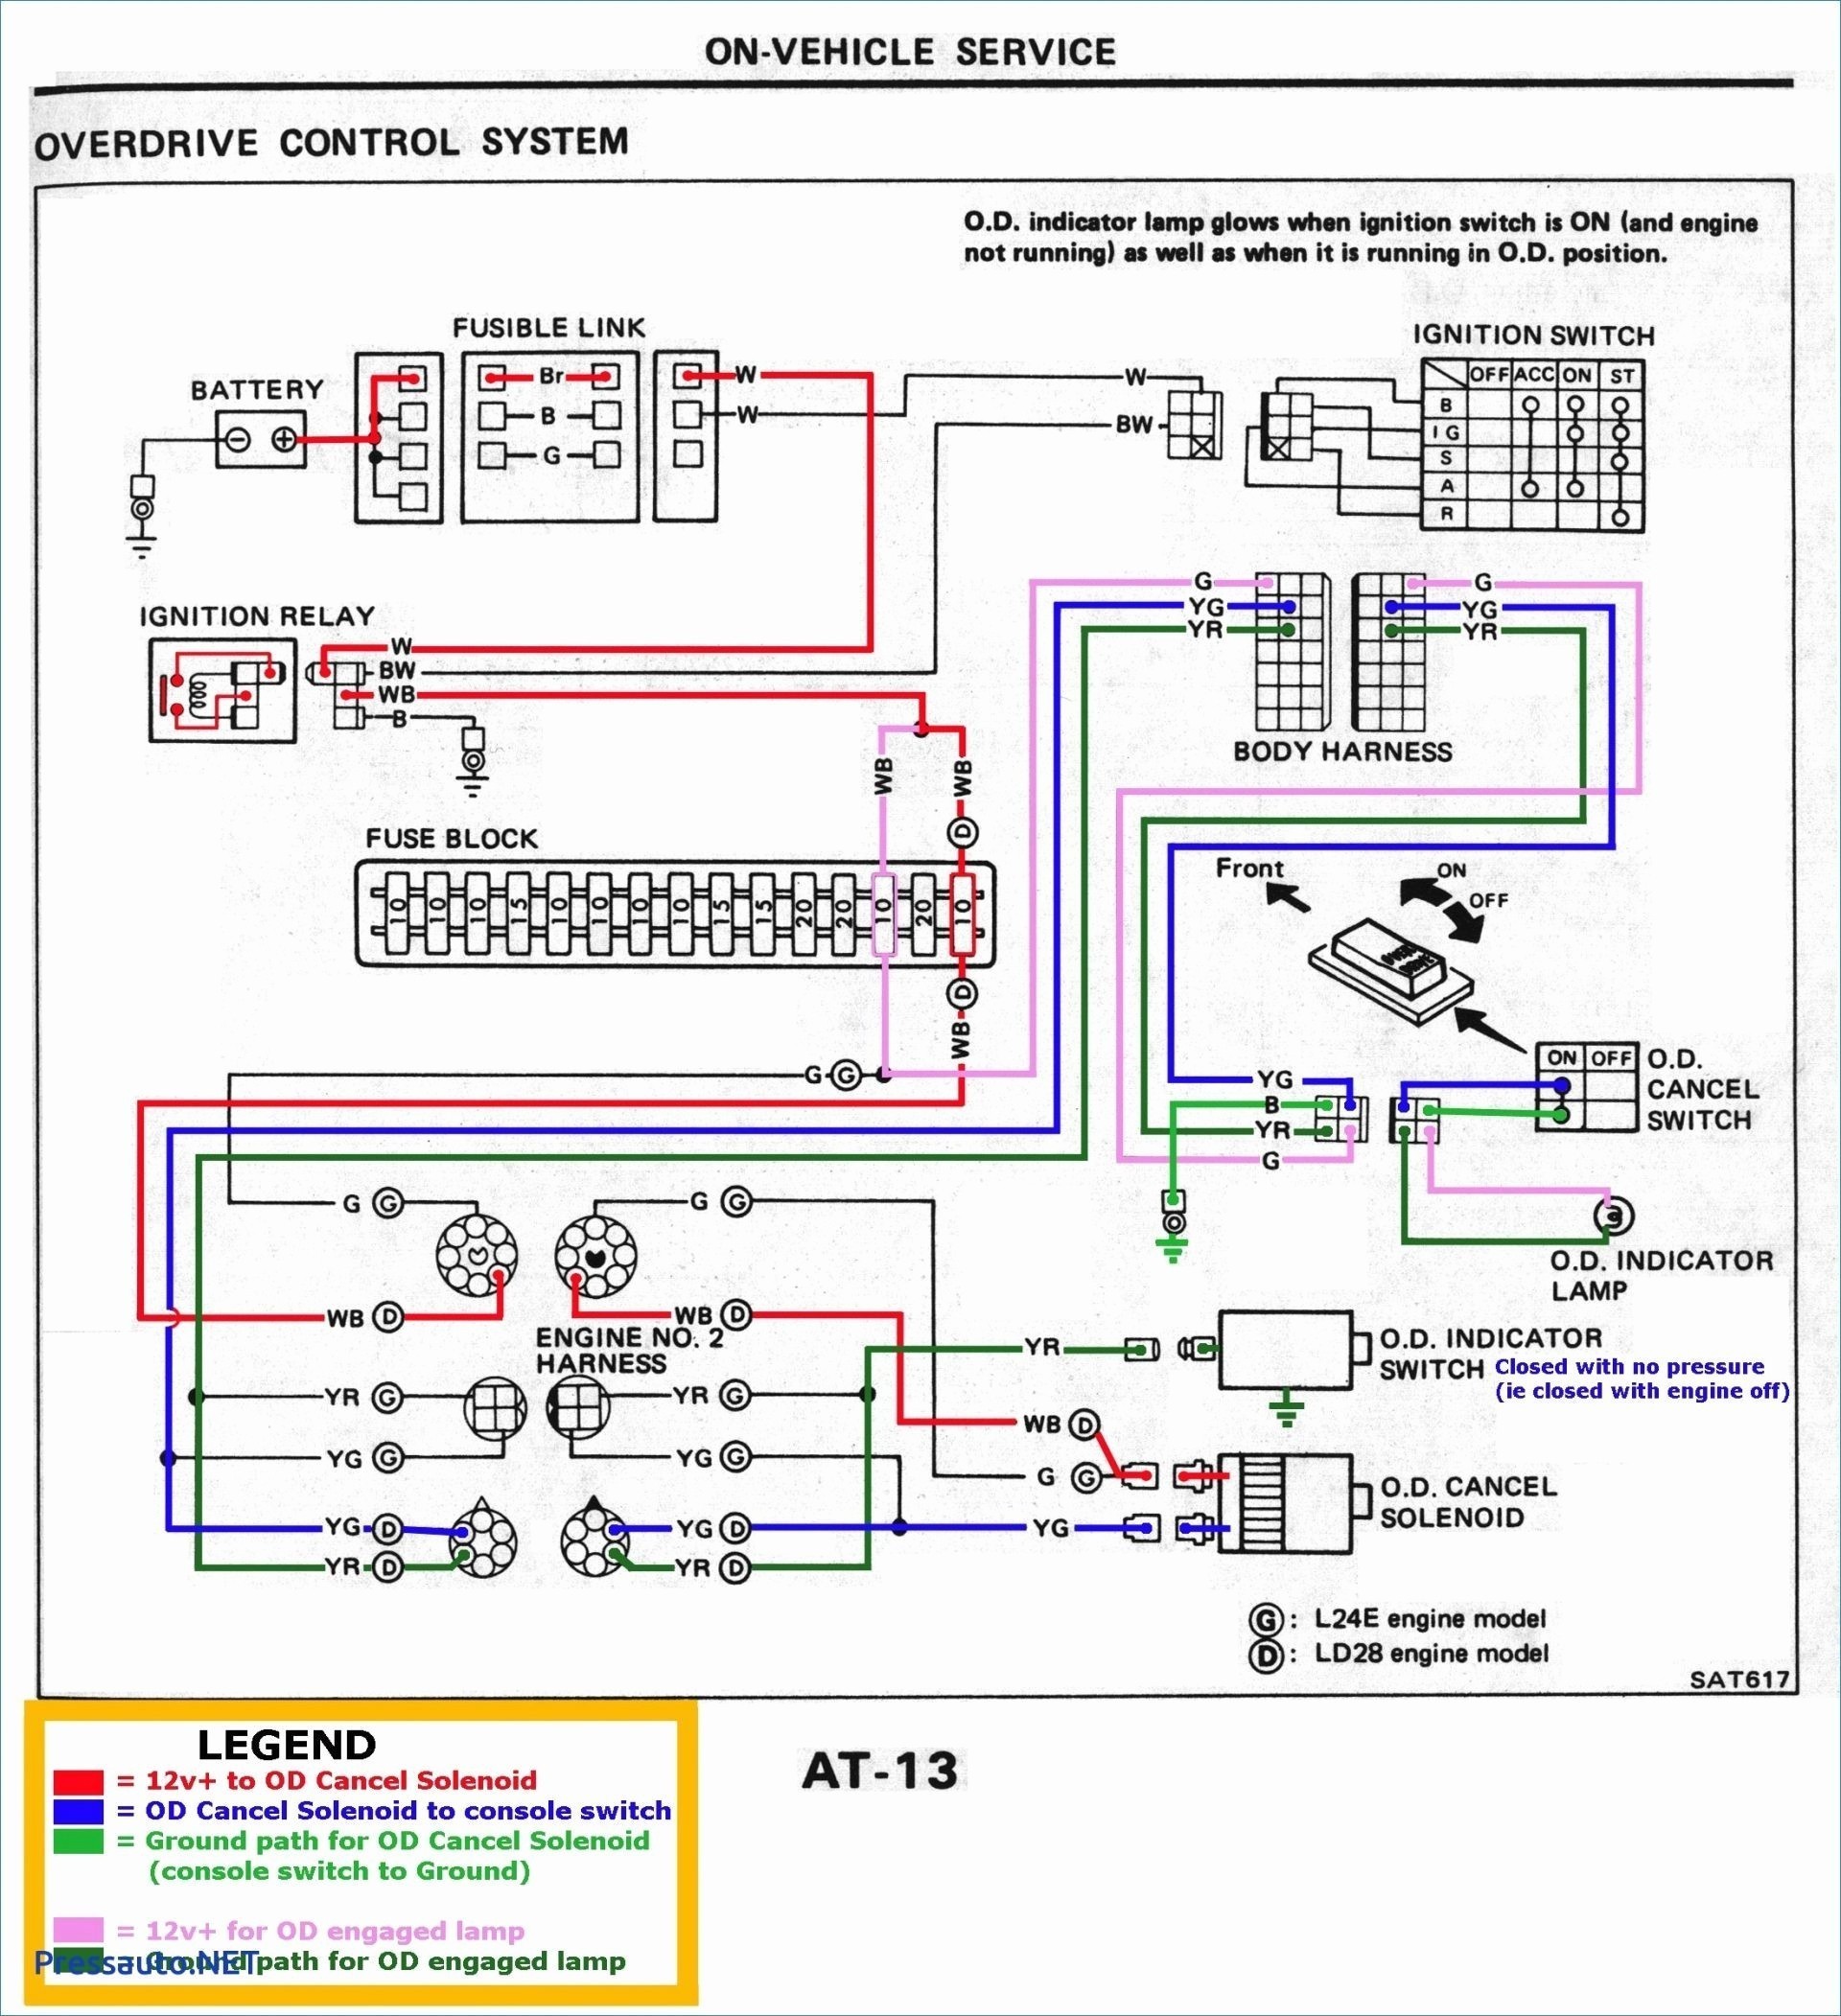 Wiring Diagram Boat Ignition Switch Valid Wiring Diagram for Johnson Outboard Ignition Switch New Alternator